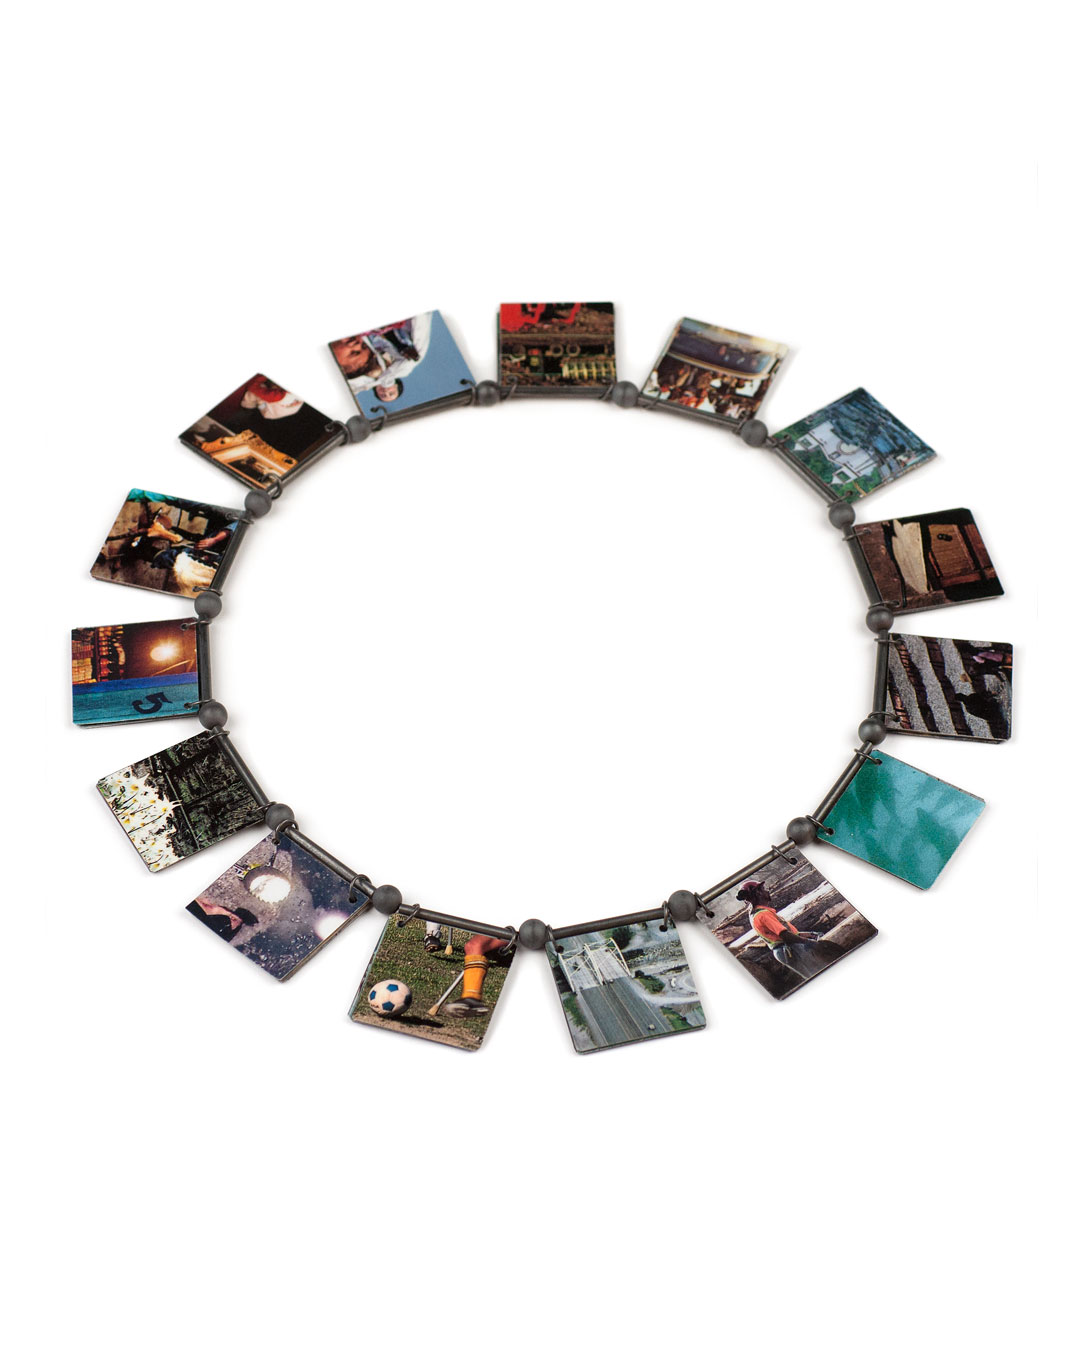 Herman Hermsen, untitled, 1997/2012, necklace; laminated photos, hematite, silver, 315 x 215 x 8 mm, €1250